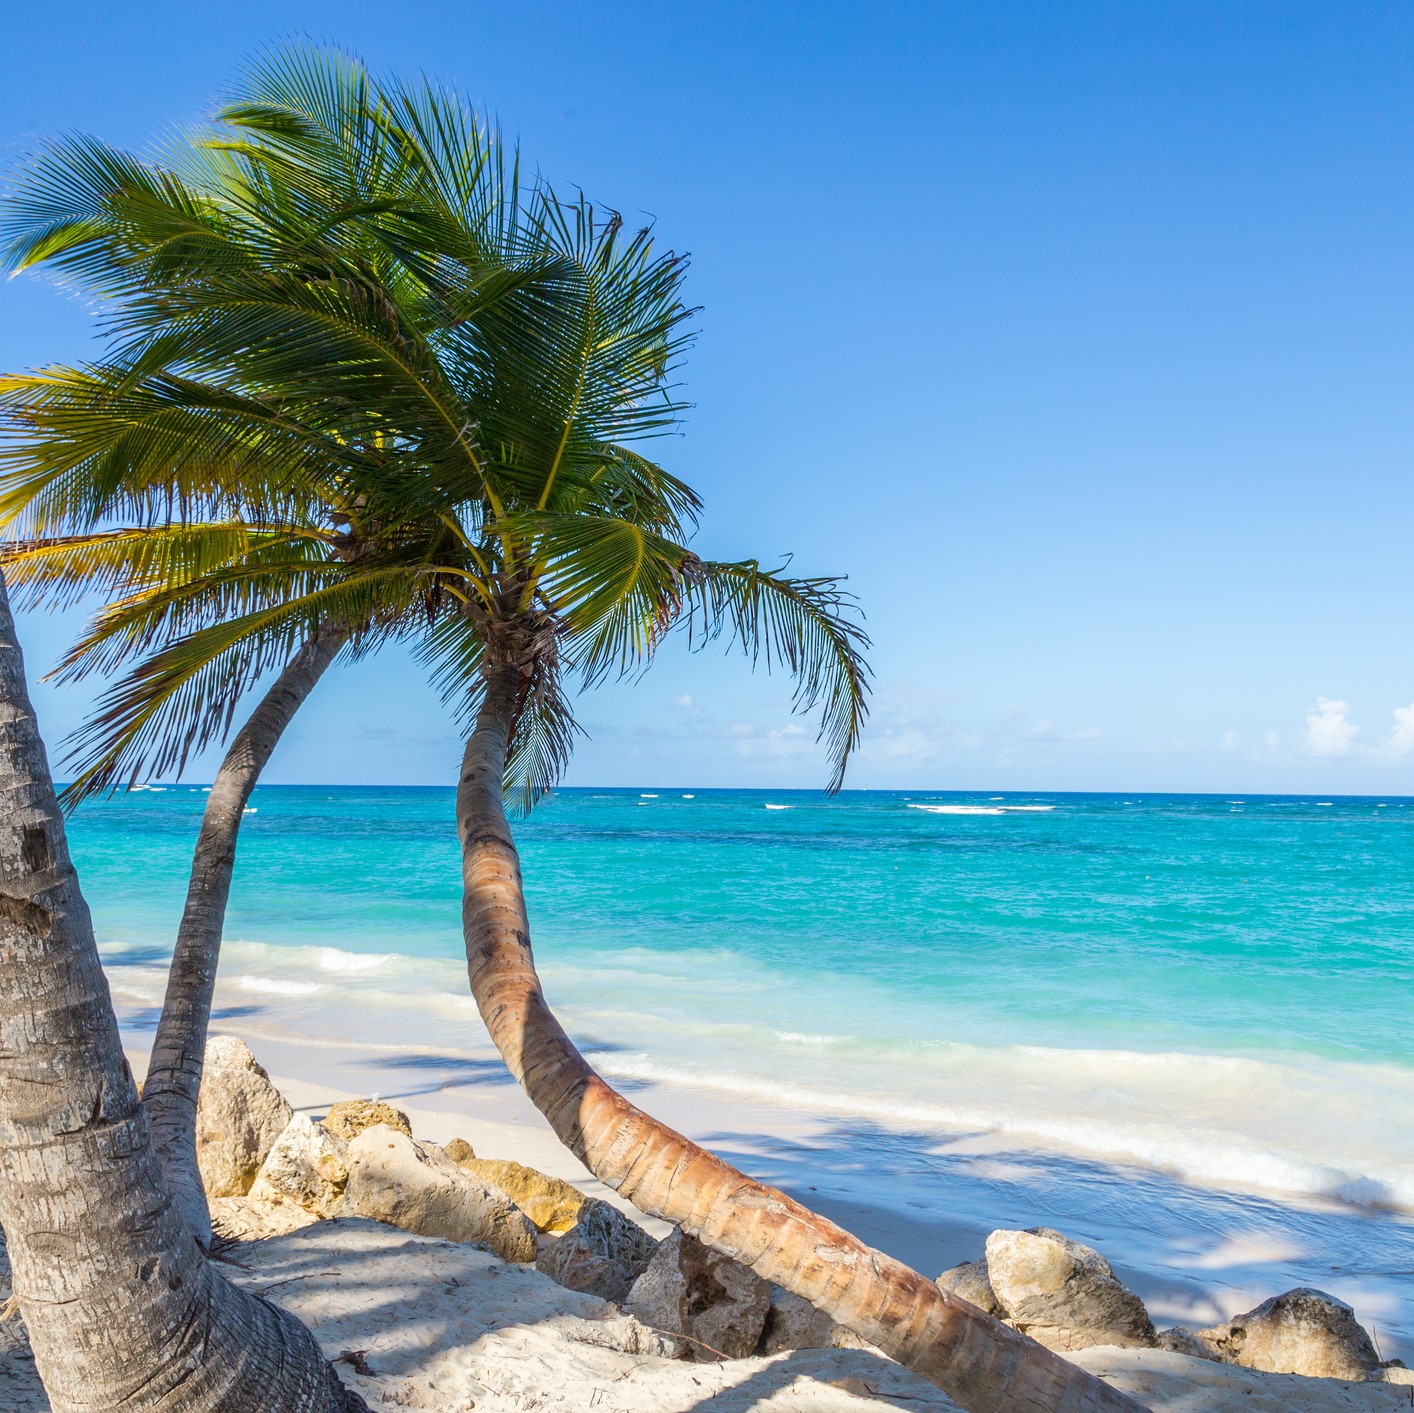 Punta Cana 4-star all-inclusive resort from $50 per night, per person